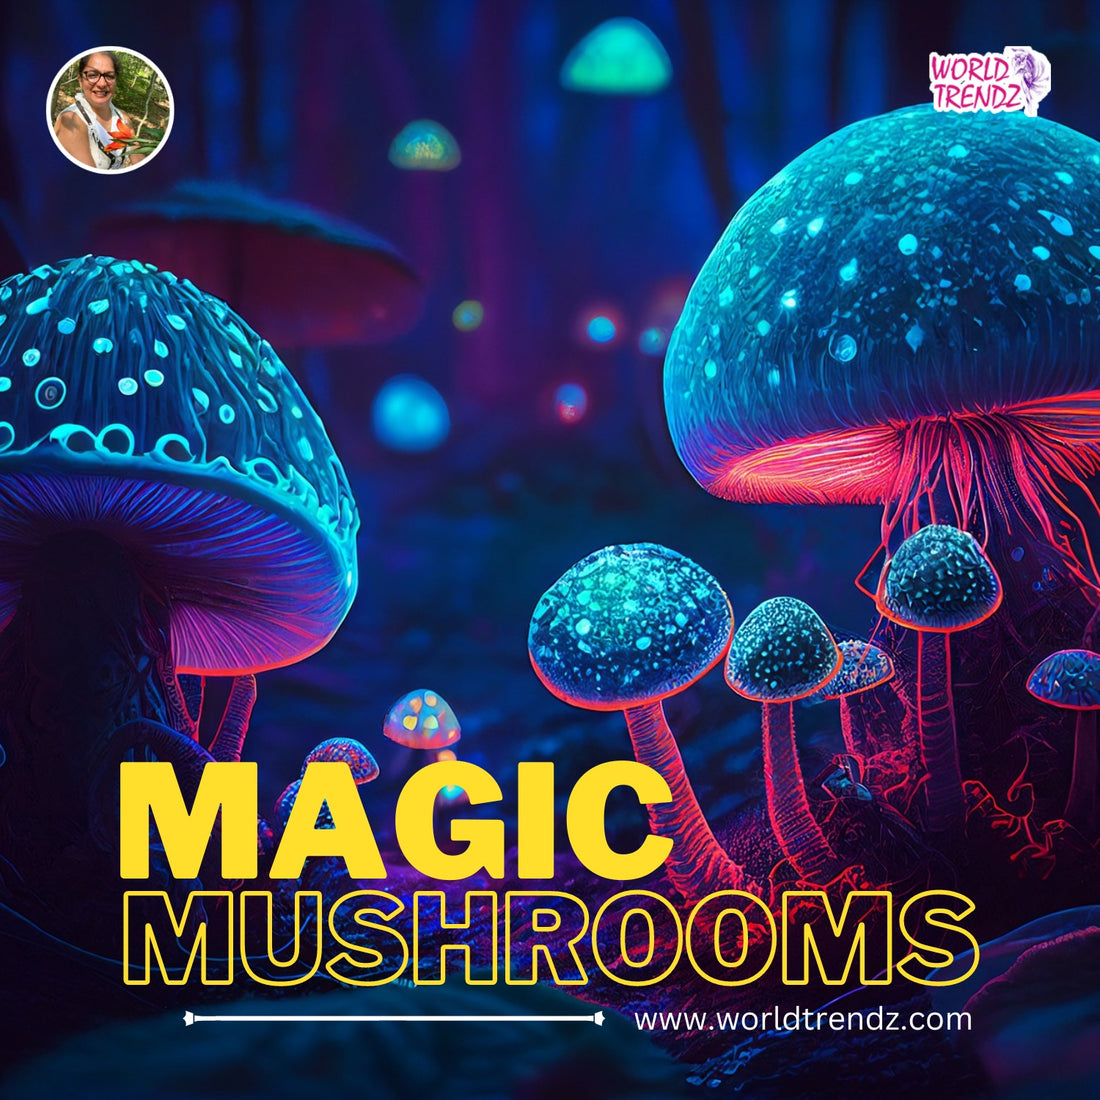 Resources That'll Make You Better at Magic Mushrooms